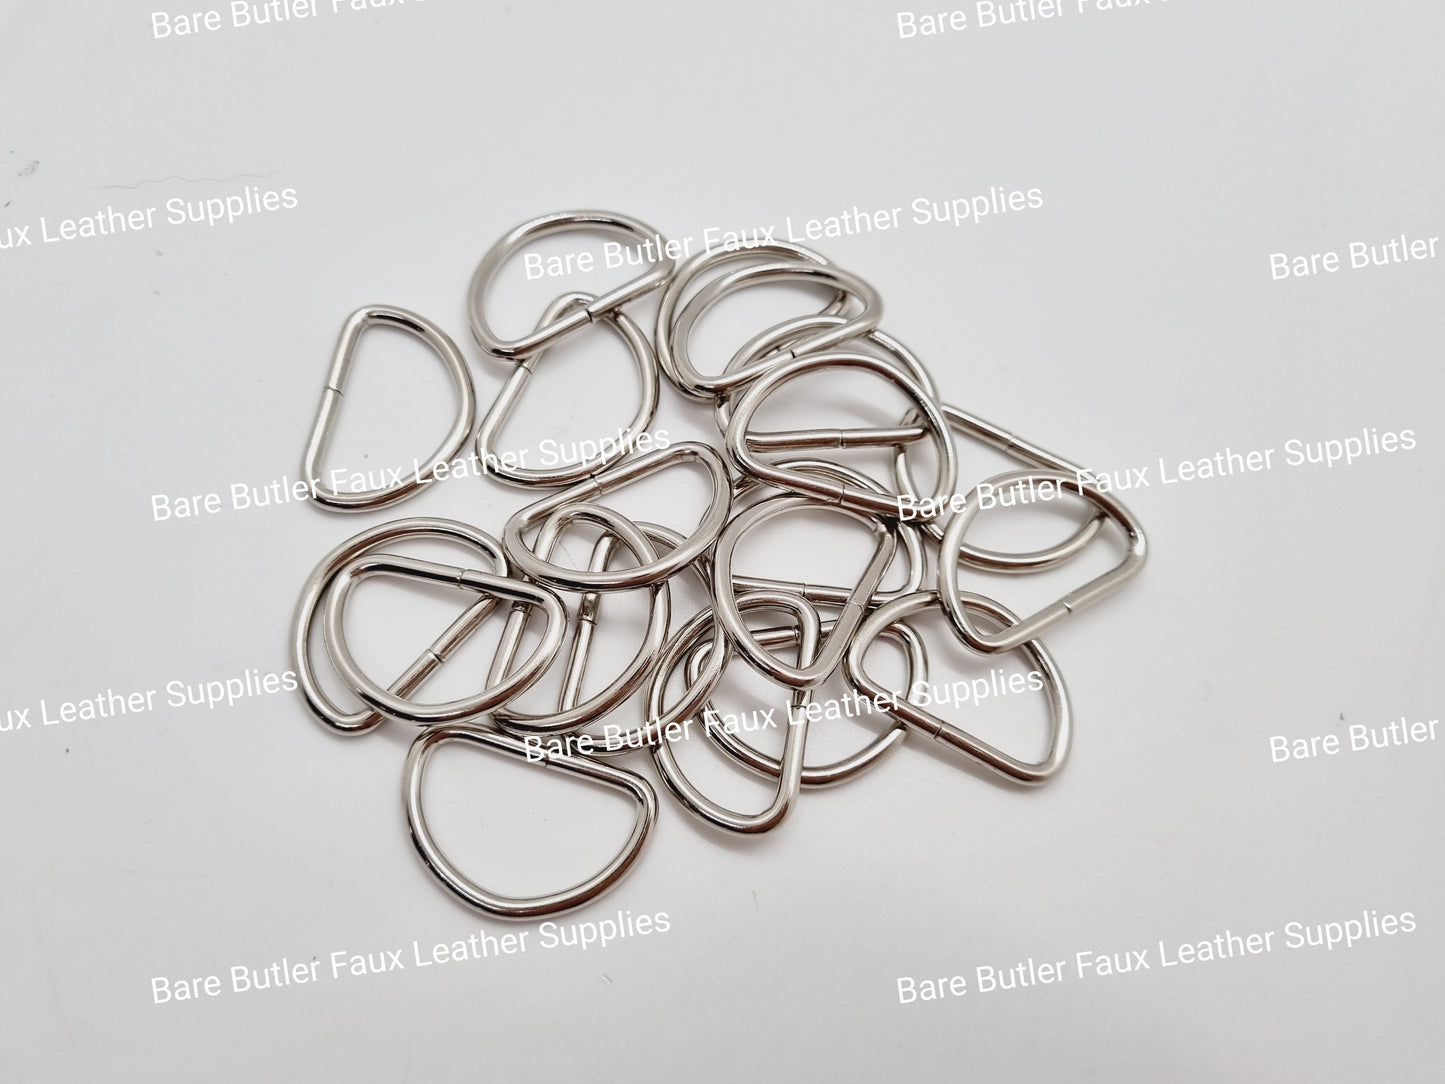 D Rings slide adjustable buckles Loop - 6 Pack - Bare Butler Faux Leather Supplies 